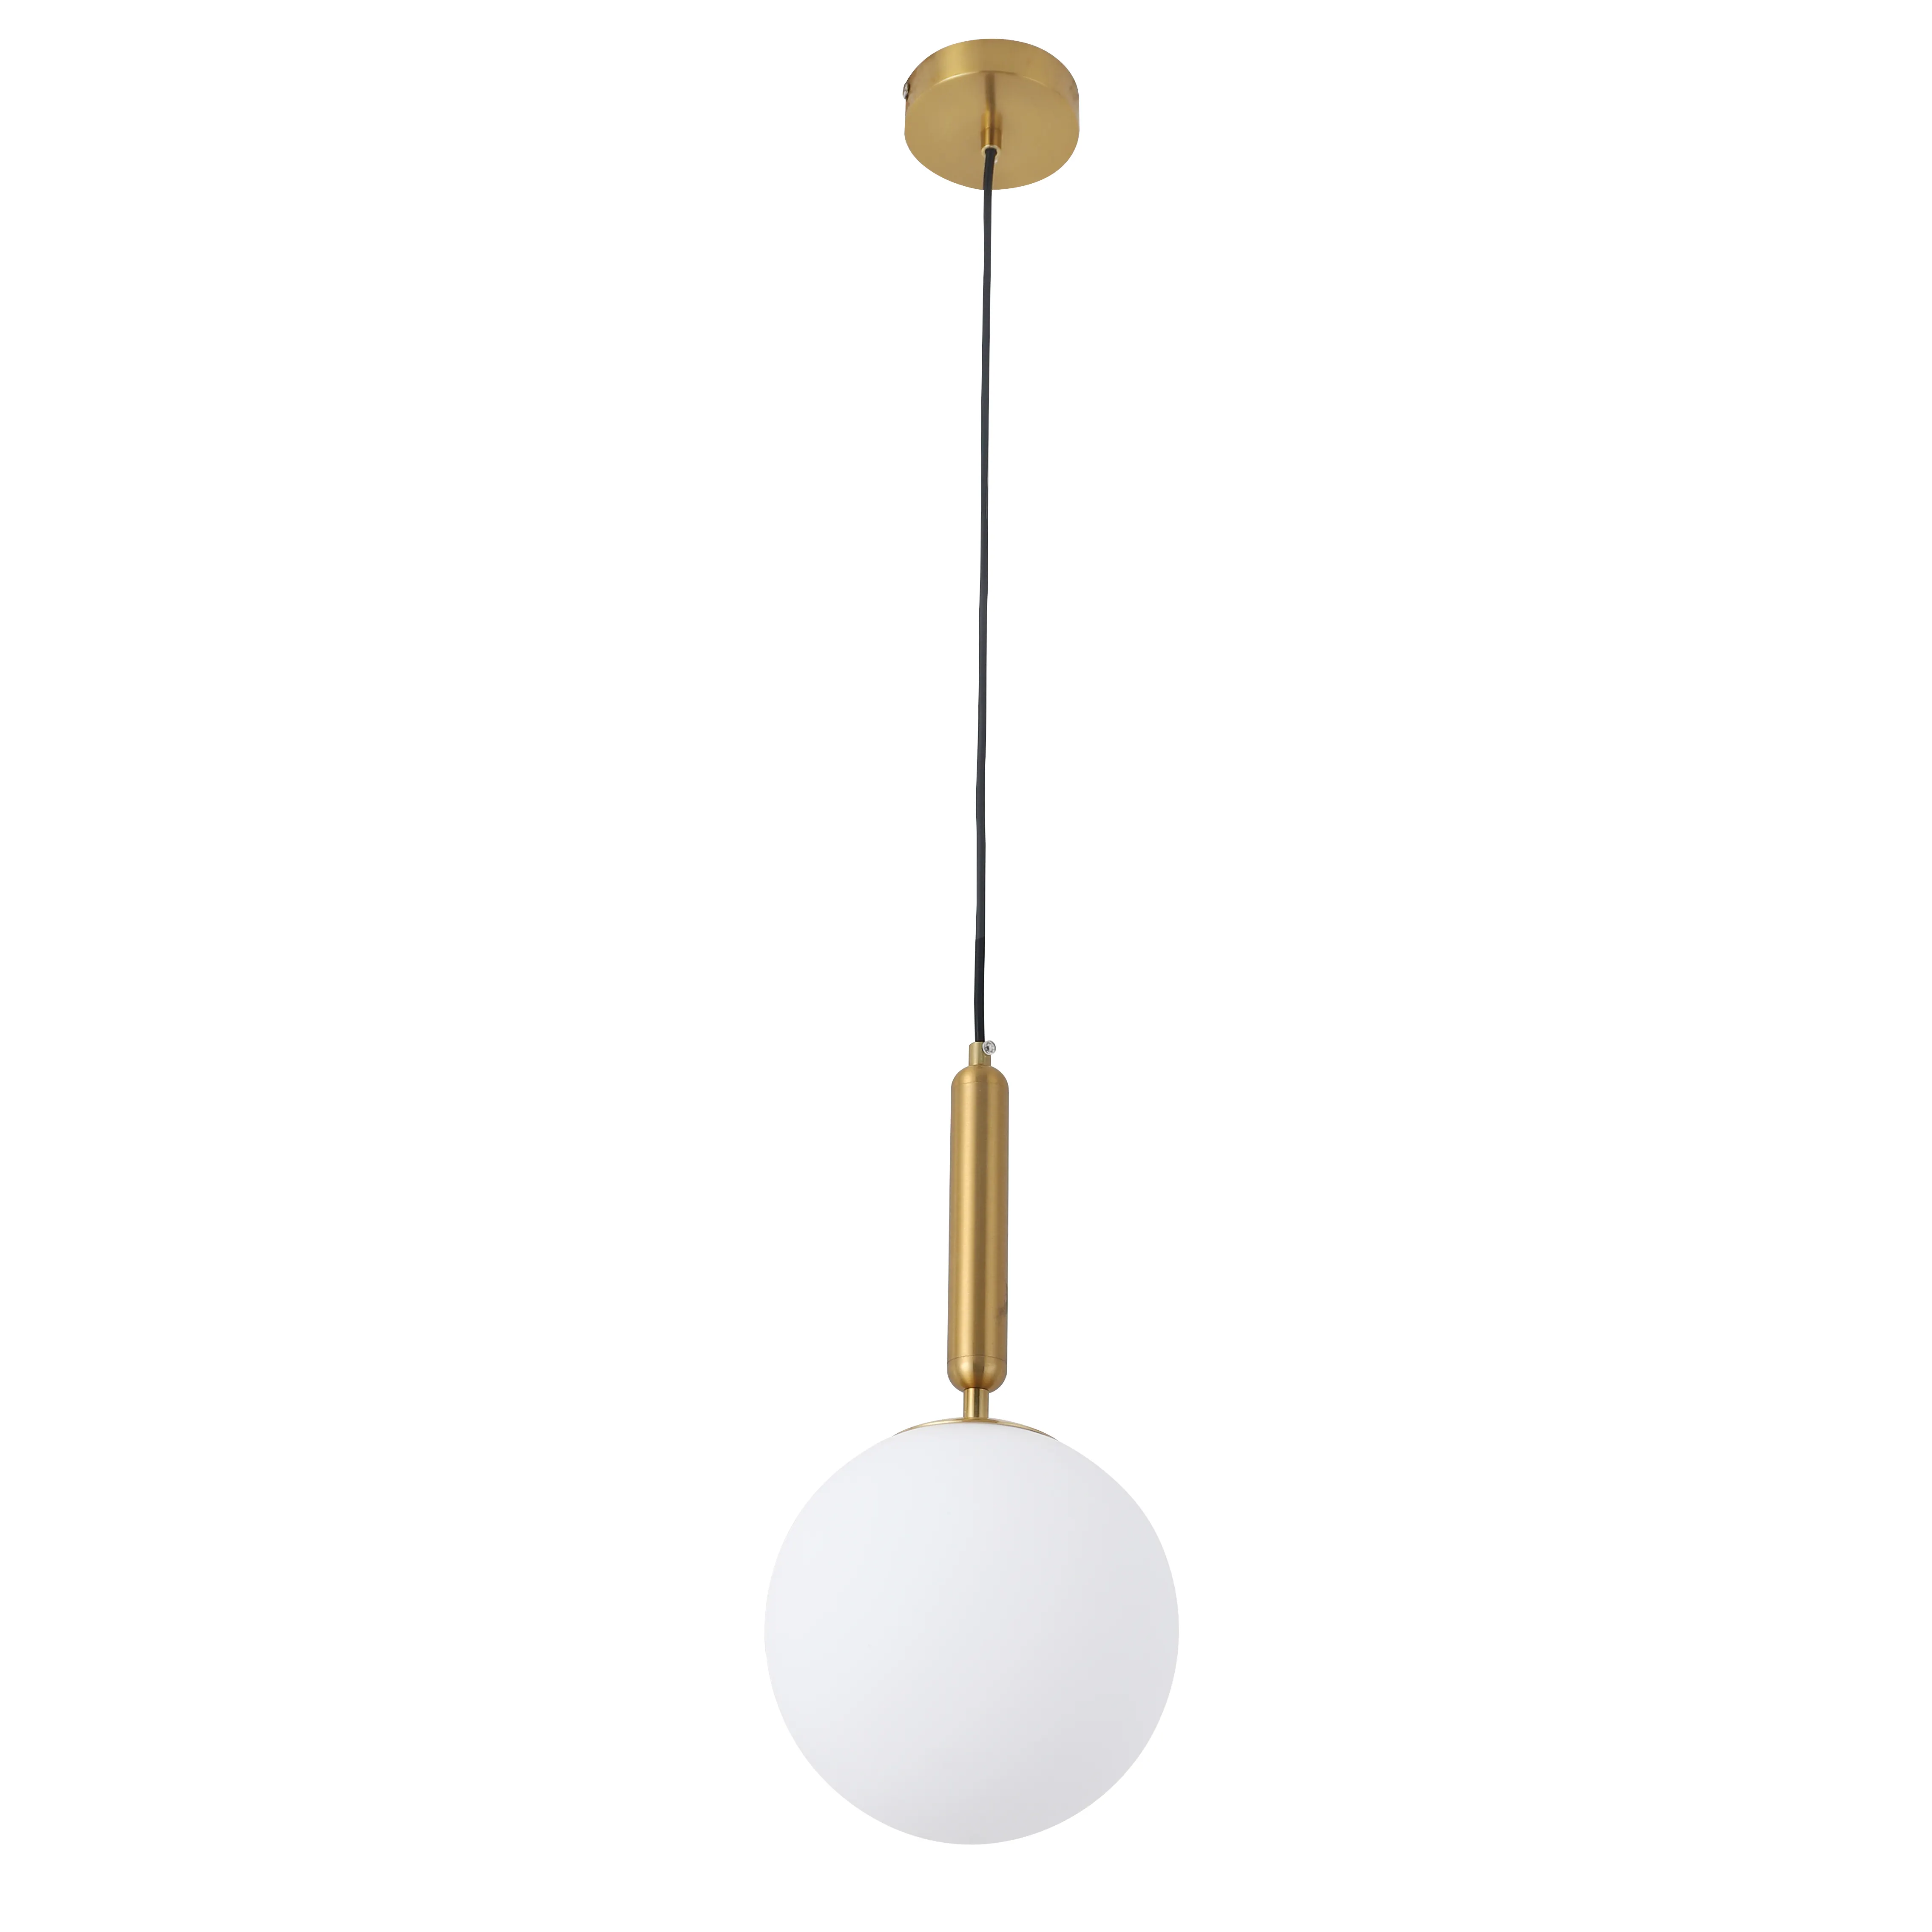 Hanging Pendant Light Industrial E27 White Glass Ball Shade Round Single Vintage Hanging Lamp Chandelier Pendant Ceiling Light